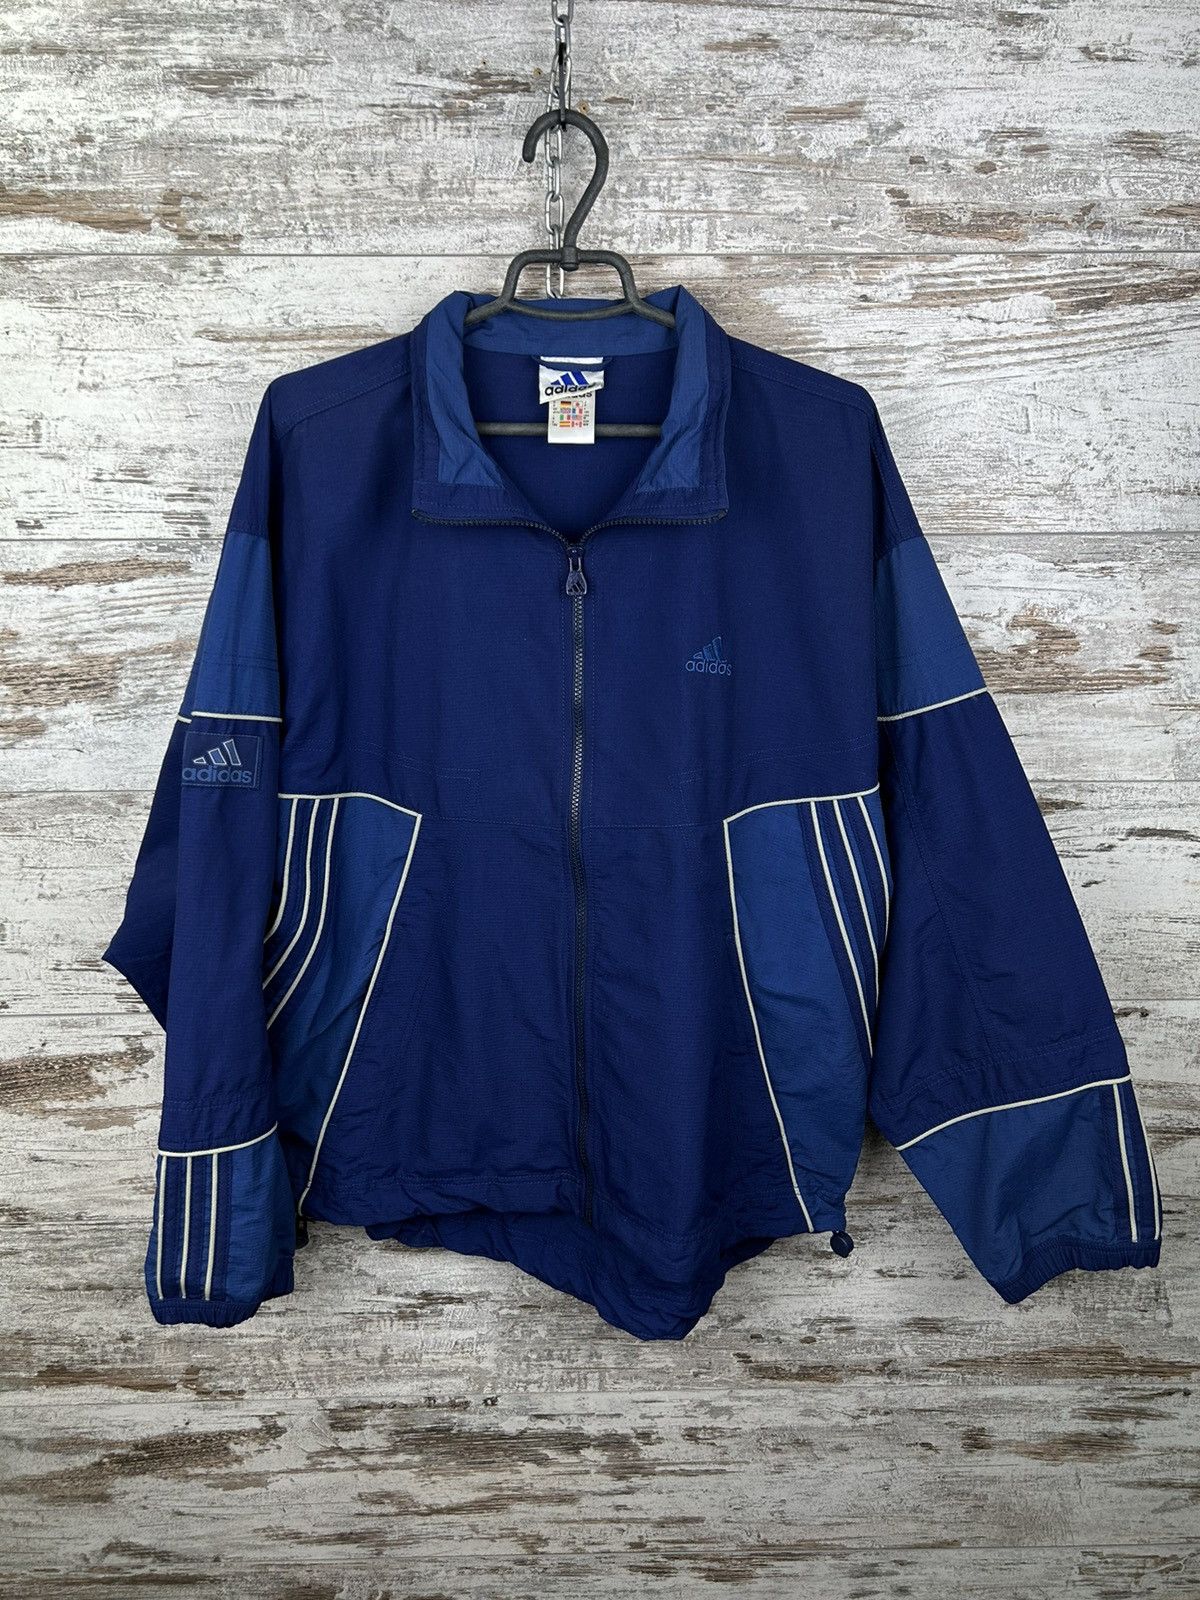 Adidas Mens Vintage Adidas Stripes Olympic track jacket y2k rare Size US M / EU 48-50 / 2 - 2 Preview